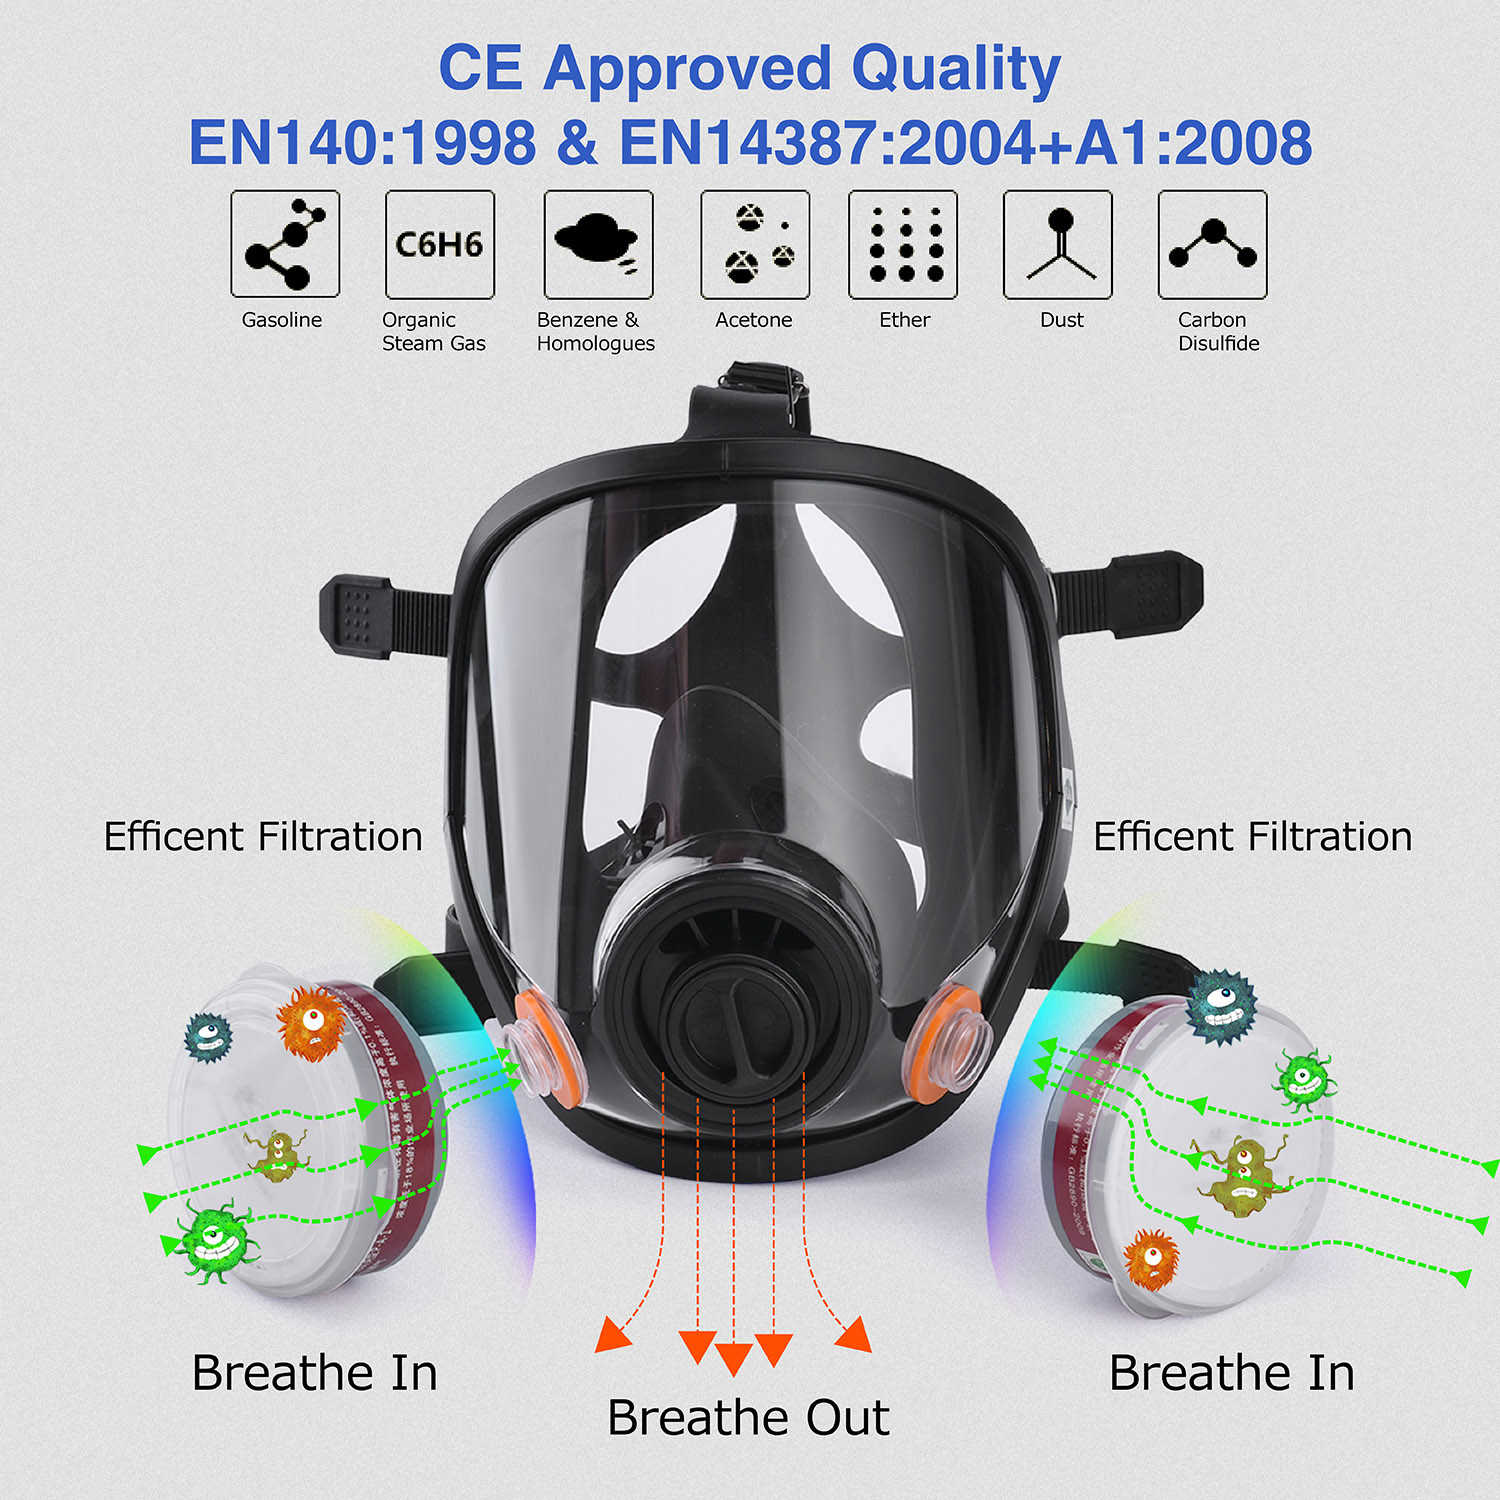 Respirador de seguridad de cara completa GM8300